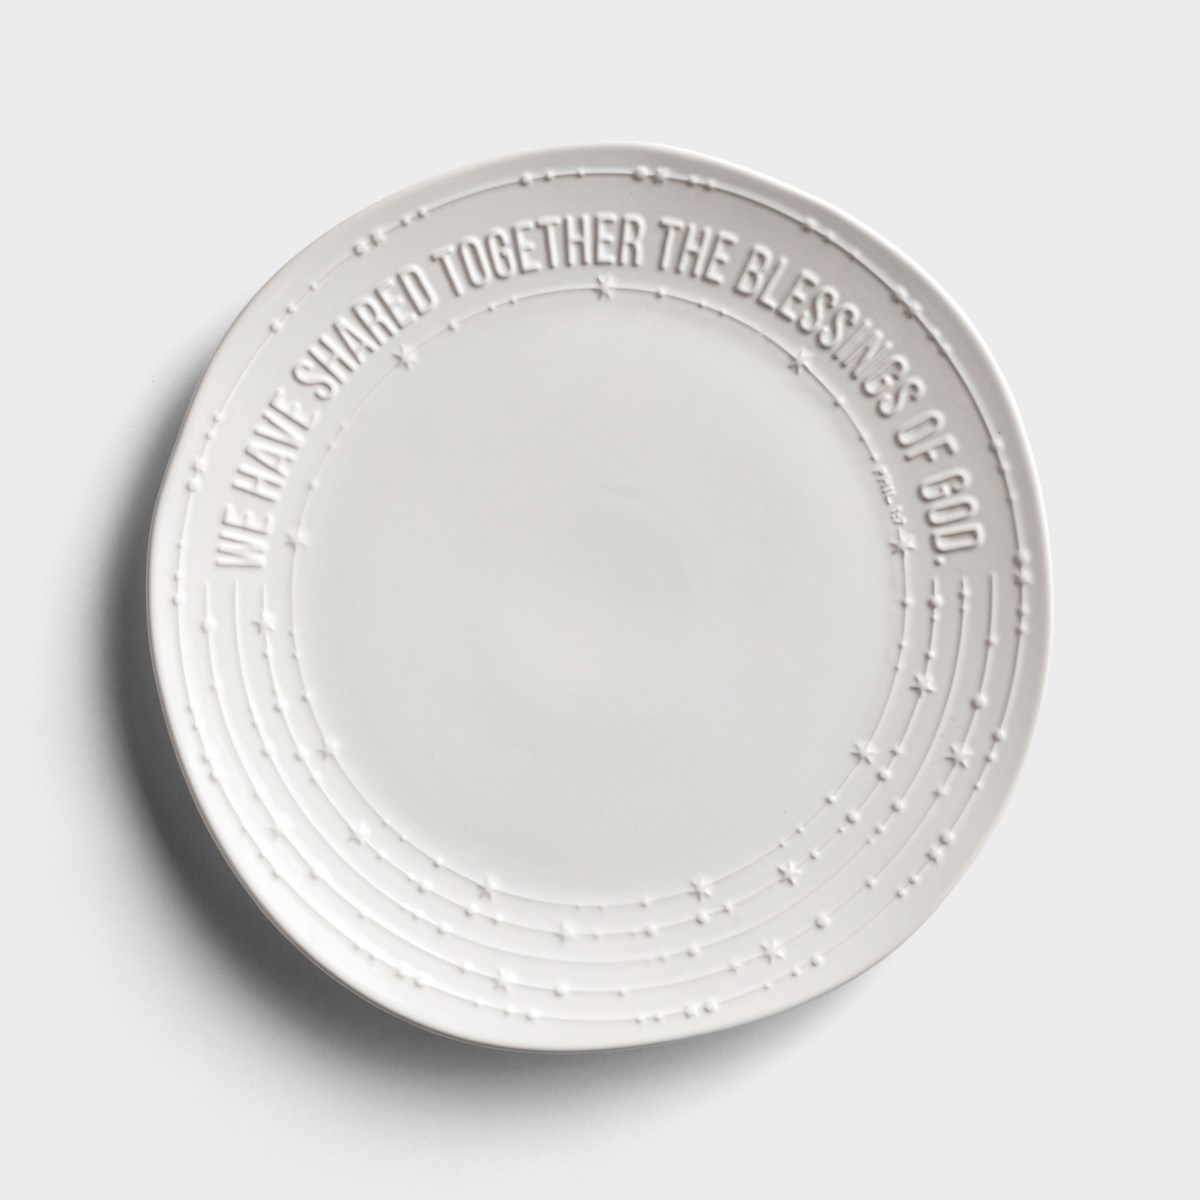 We Have Shared Together the Blessings of God - Ceramic Platter